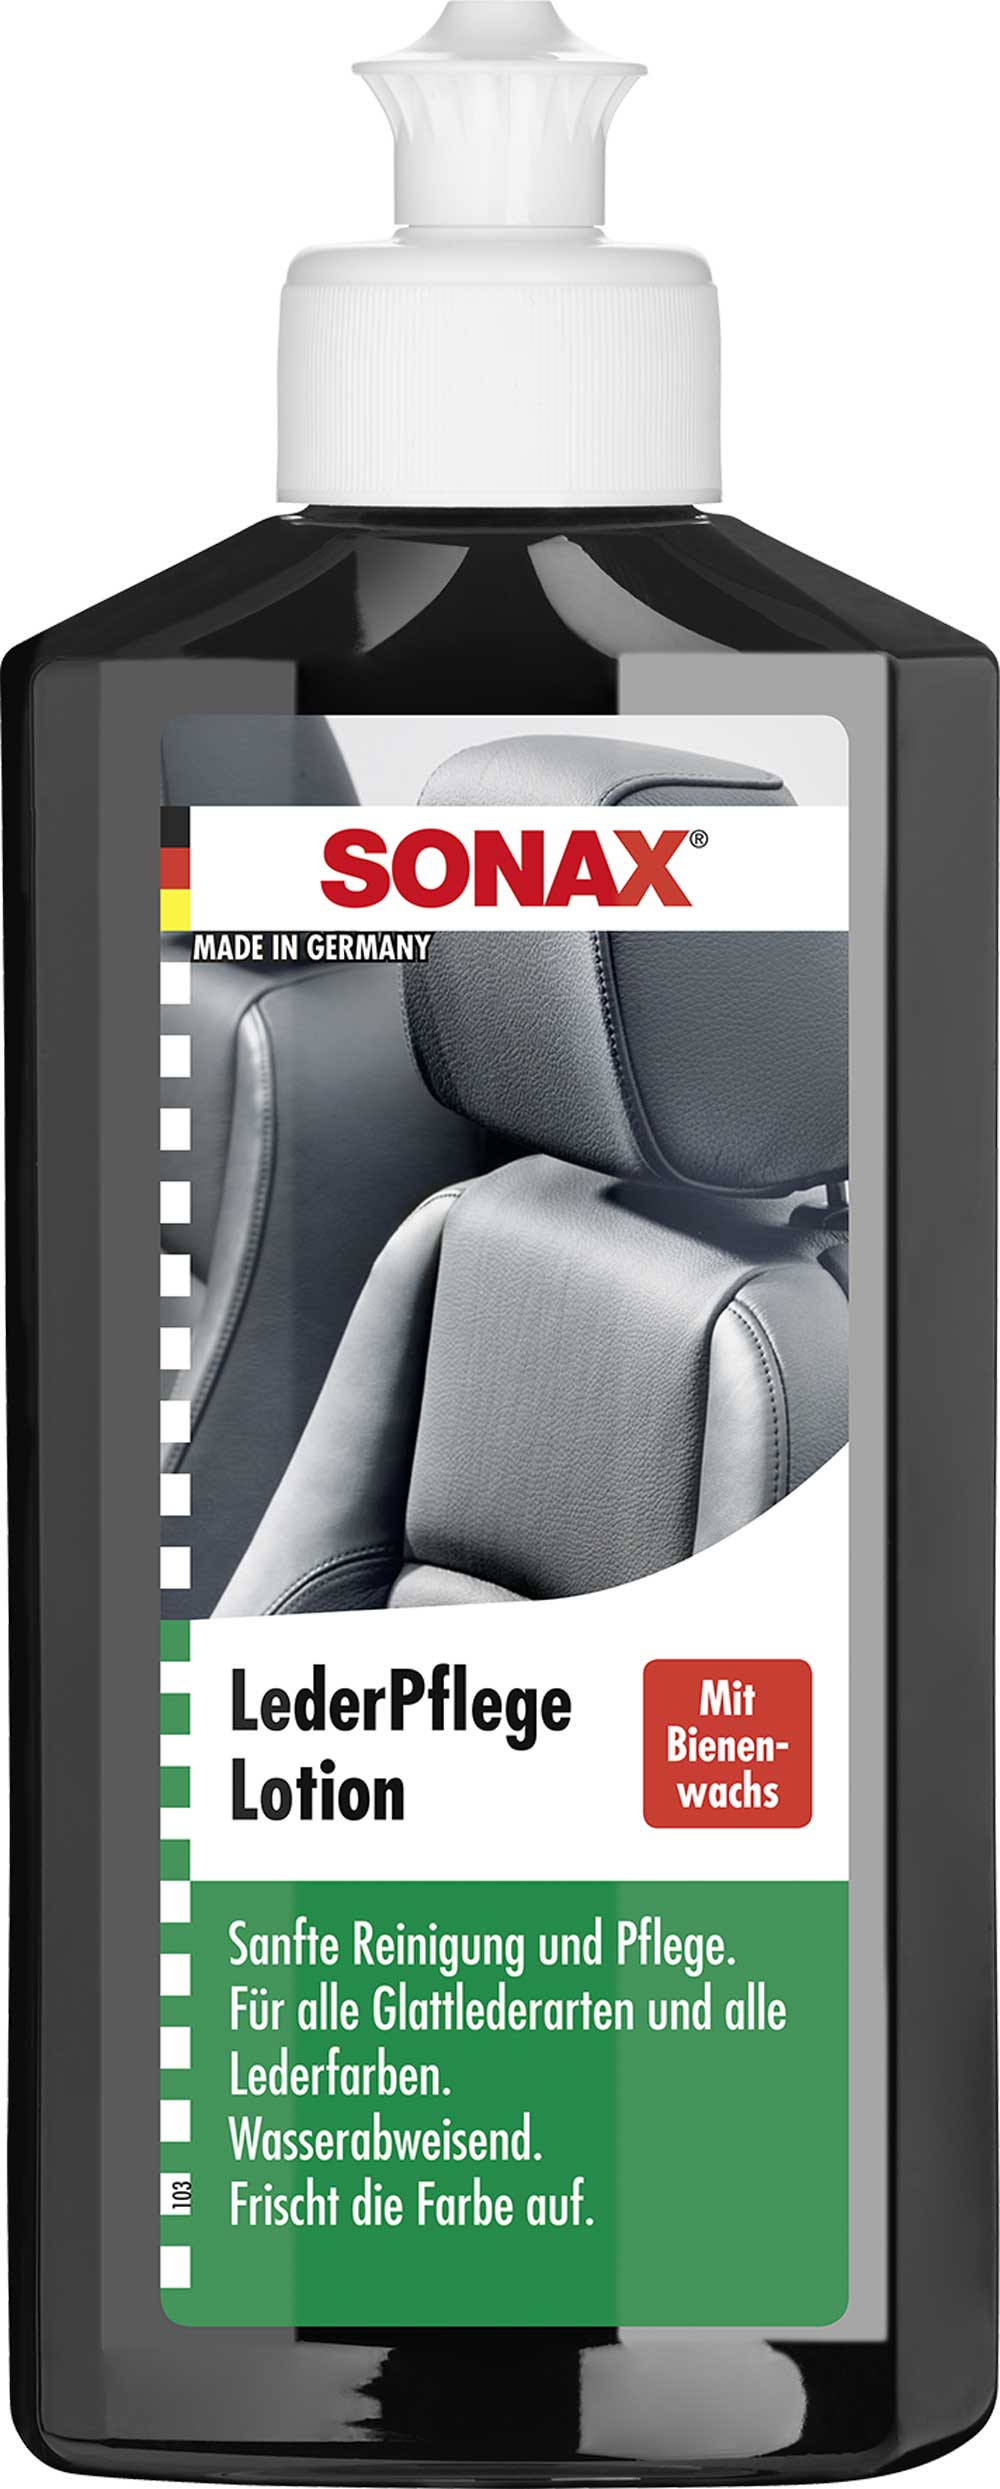 SONAX LederPflegeLotion 250 ml Textil- & LederBürste MicrofaserTuch für Polster Leder